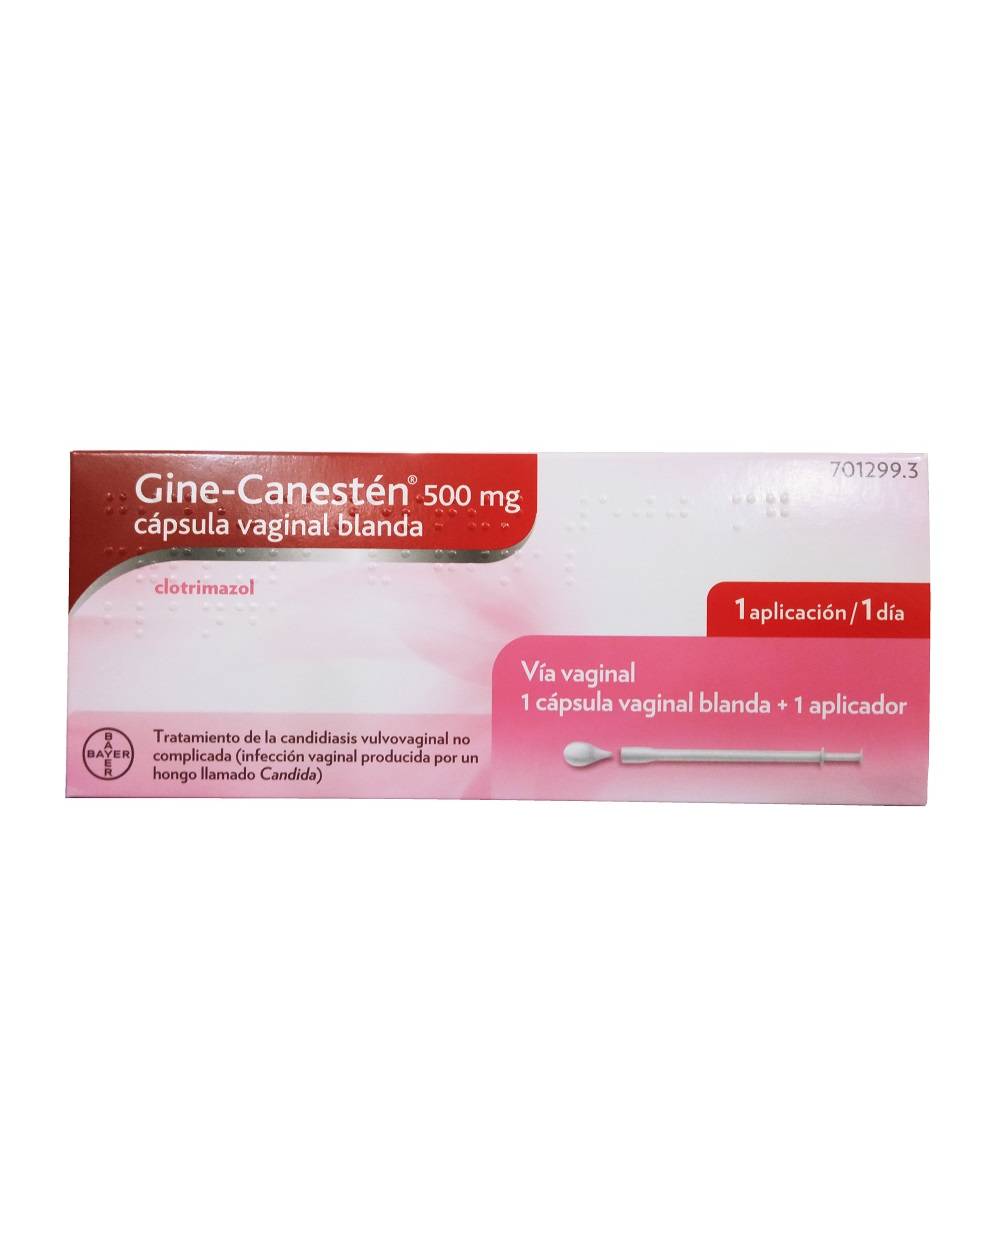 Gine-canestén 500 mg - 1 cápsula vaginal blanda